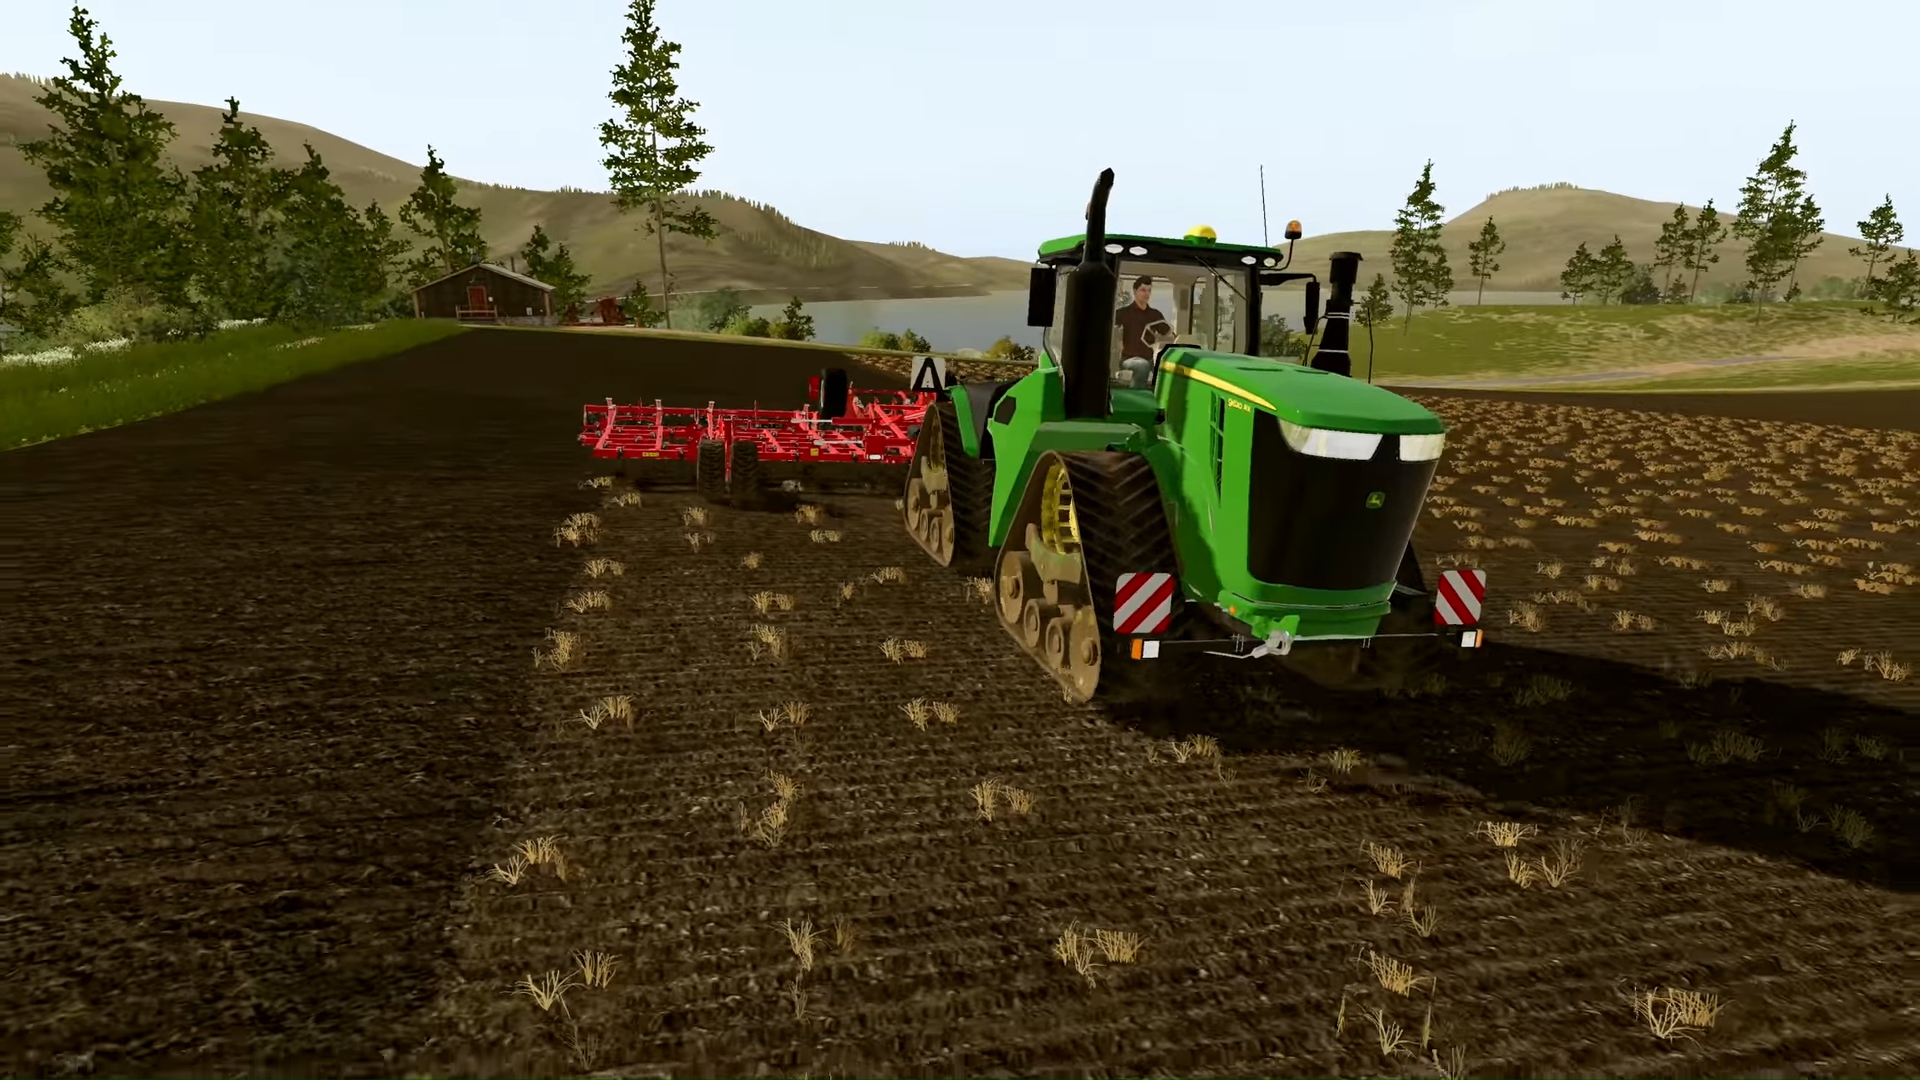 Best farm games - Farm Simulator 20. A screenshot shows a tractor driving across farmland.